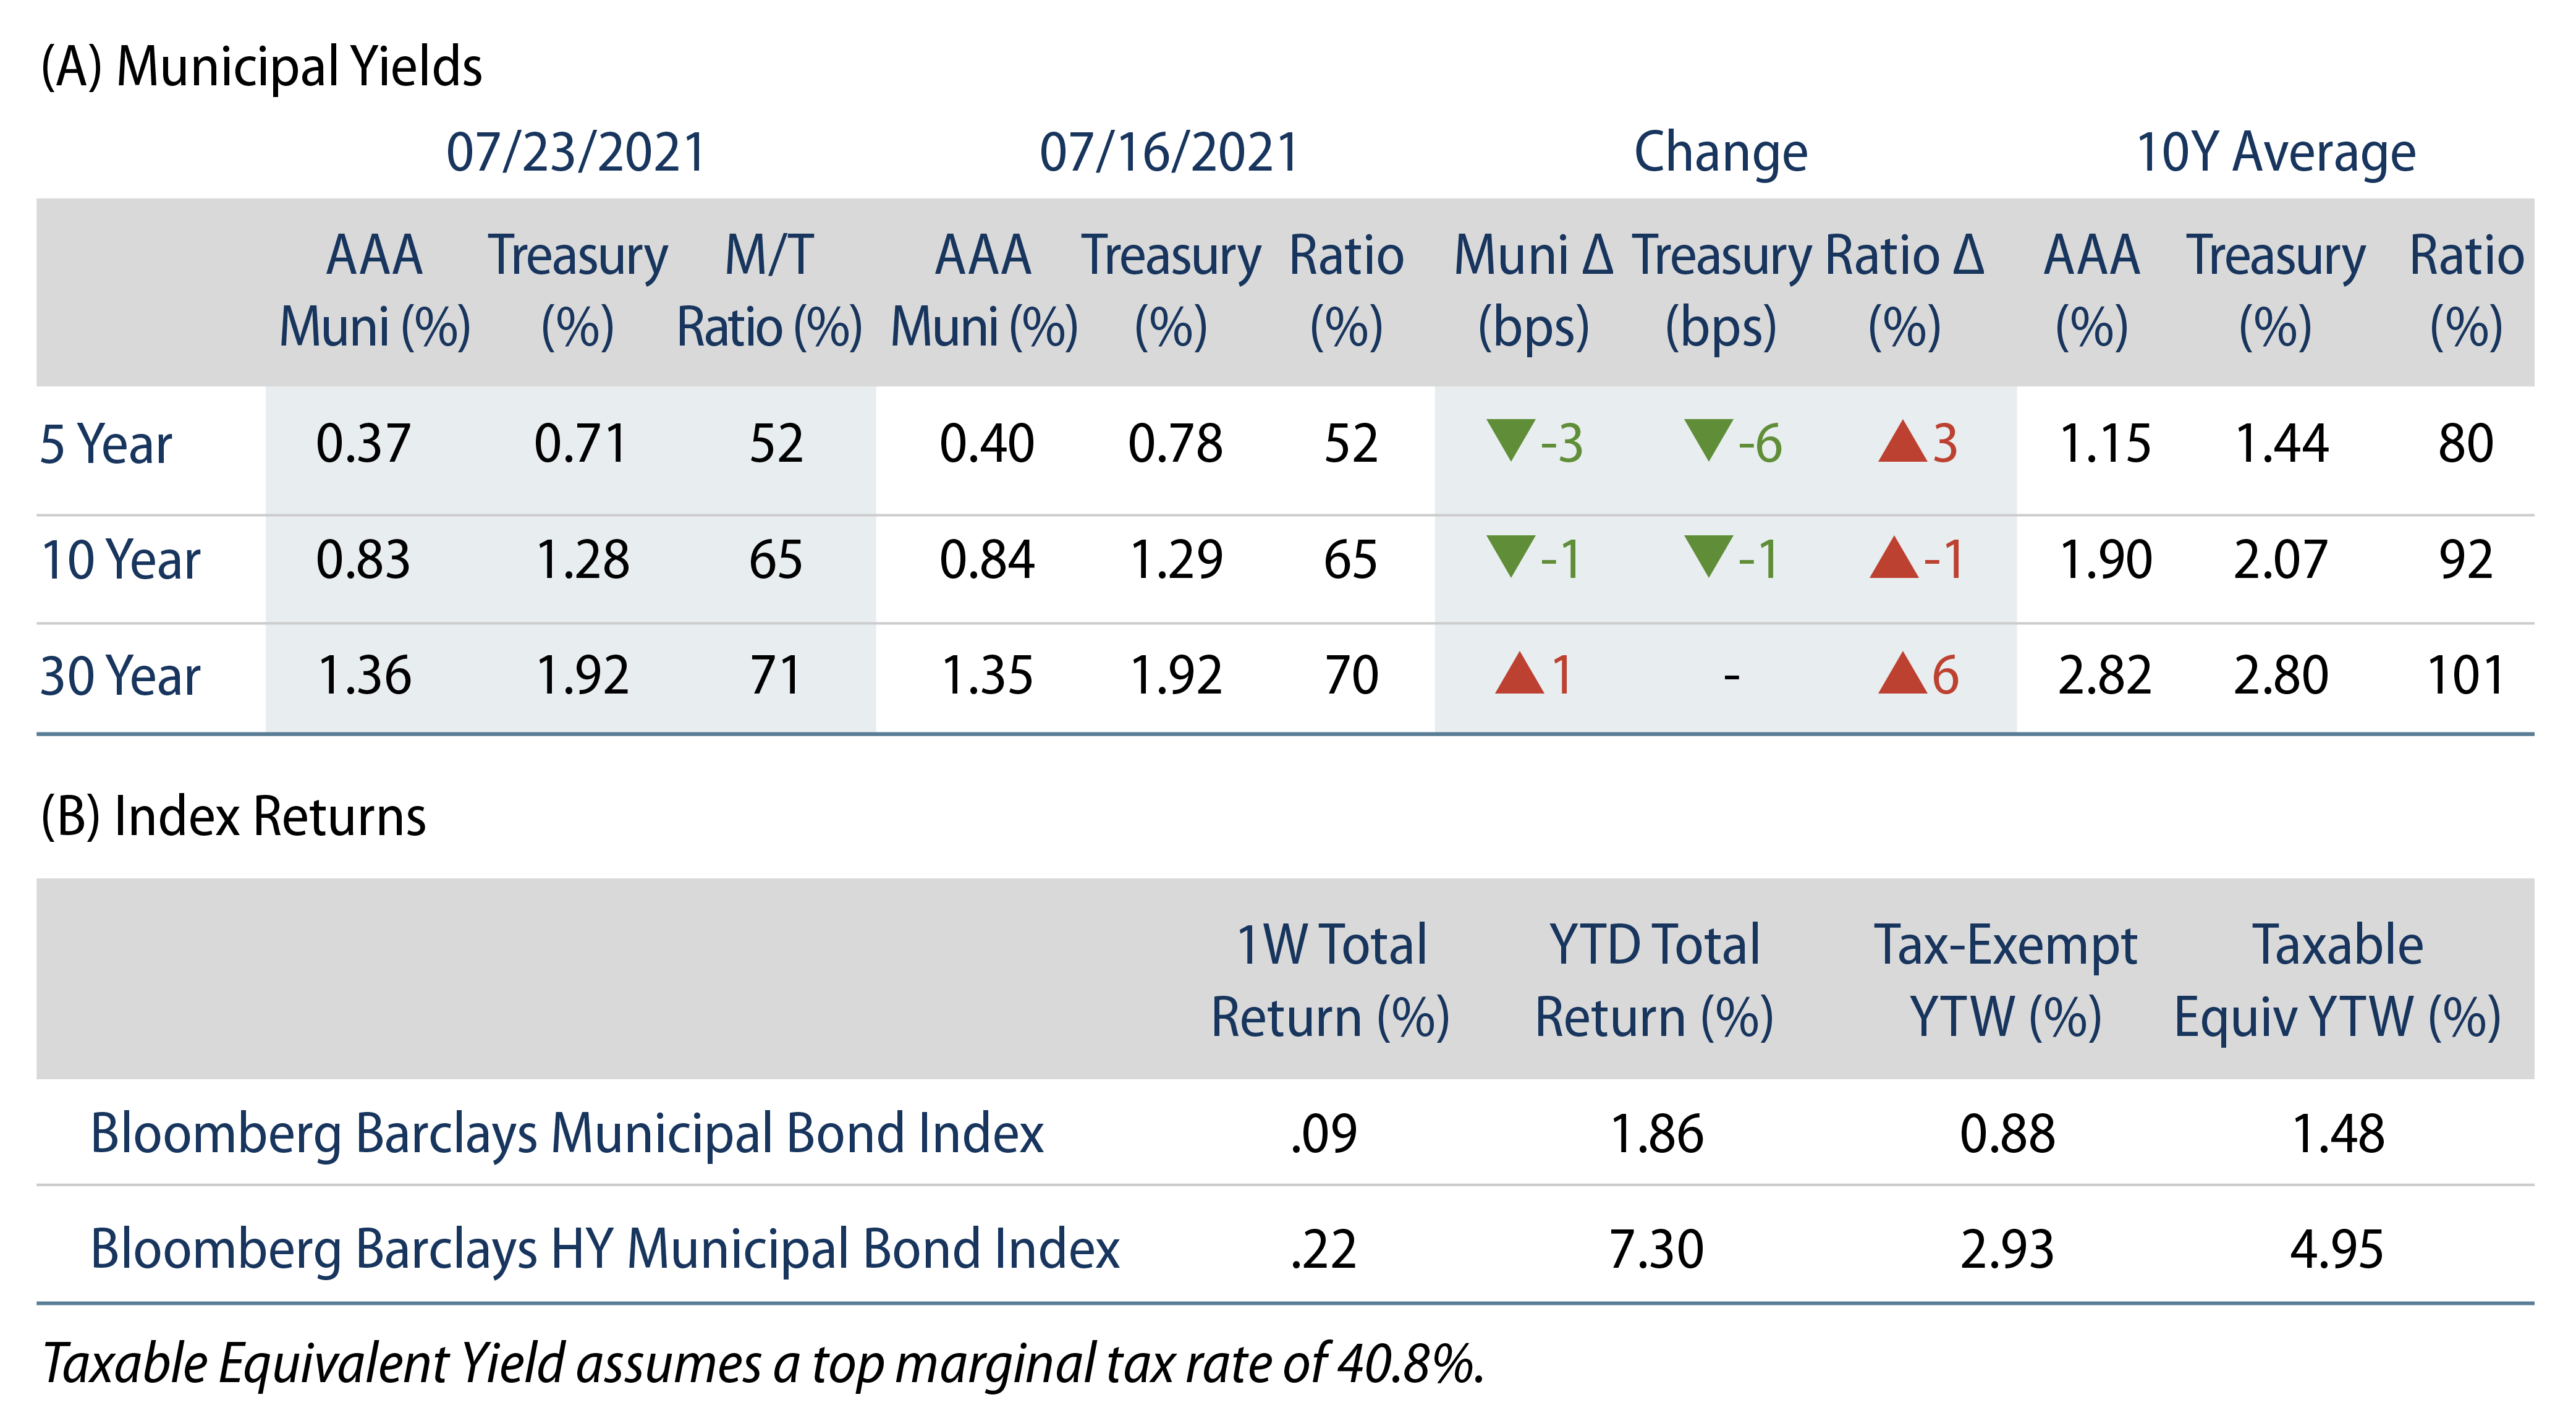 Explore Municipal Bond Yields and Index Return